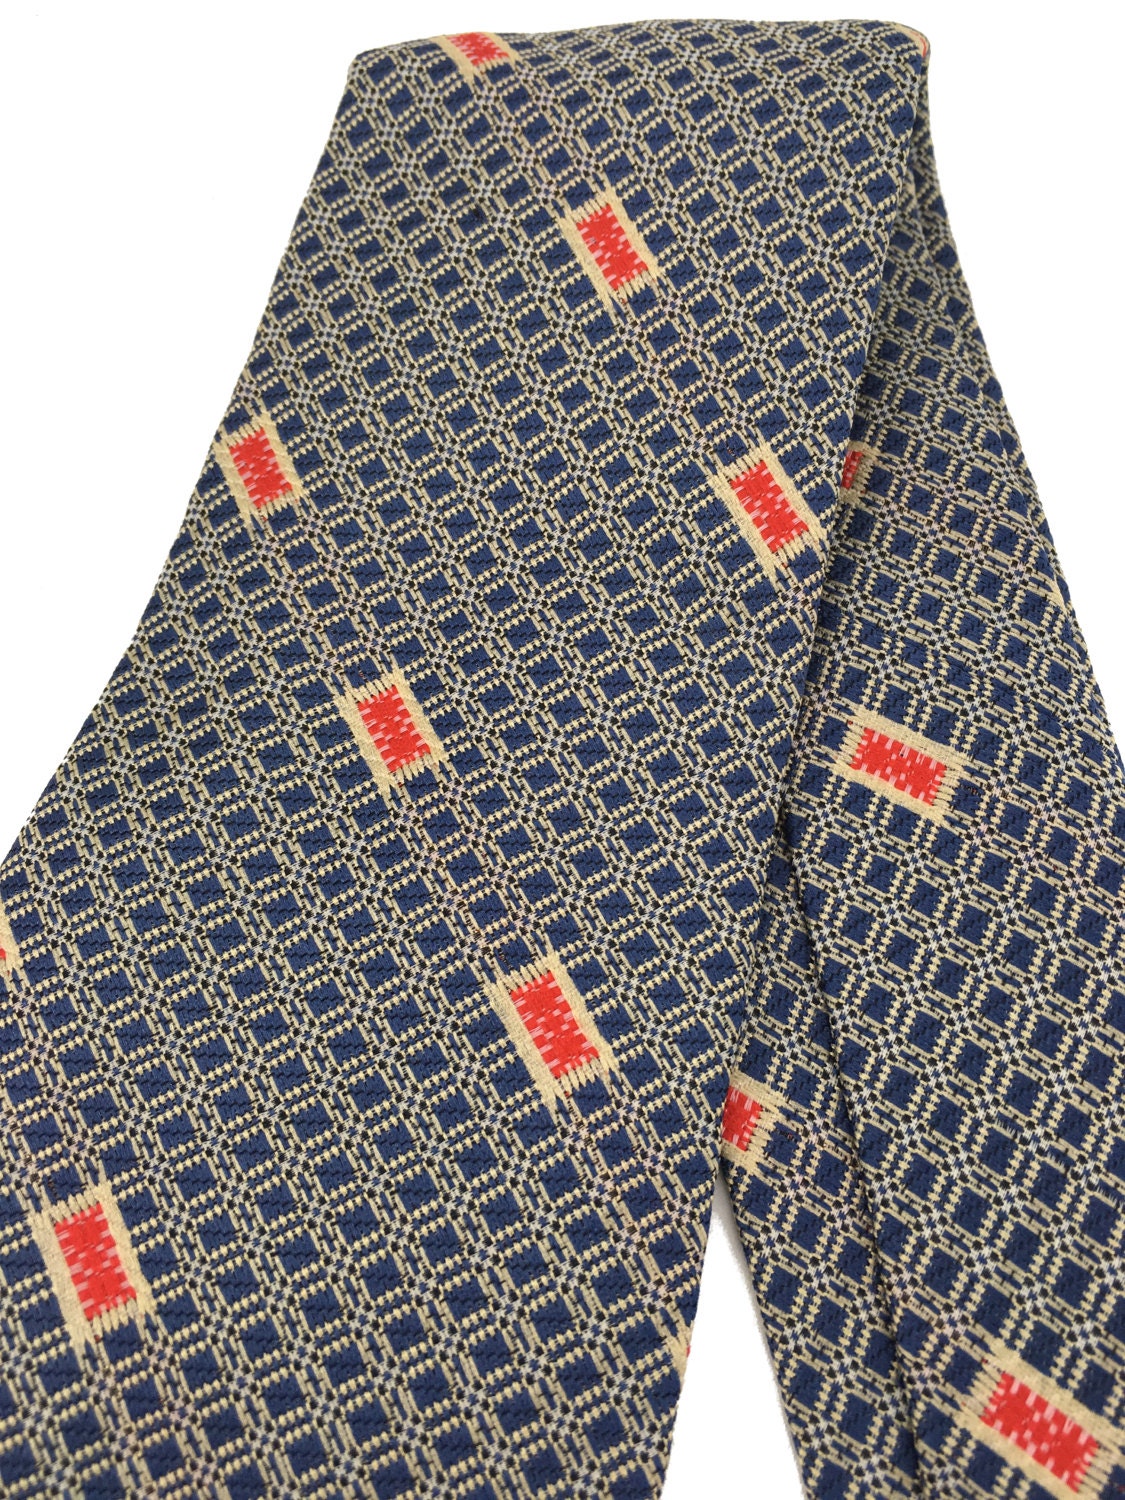 Vintage 1970's Wide Kipper Tie Geometric Check Pattern - Etsy UK